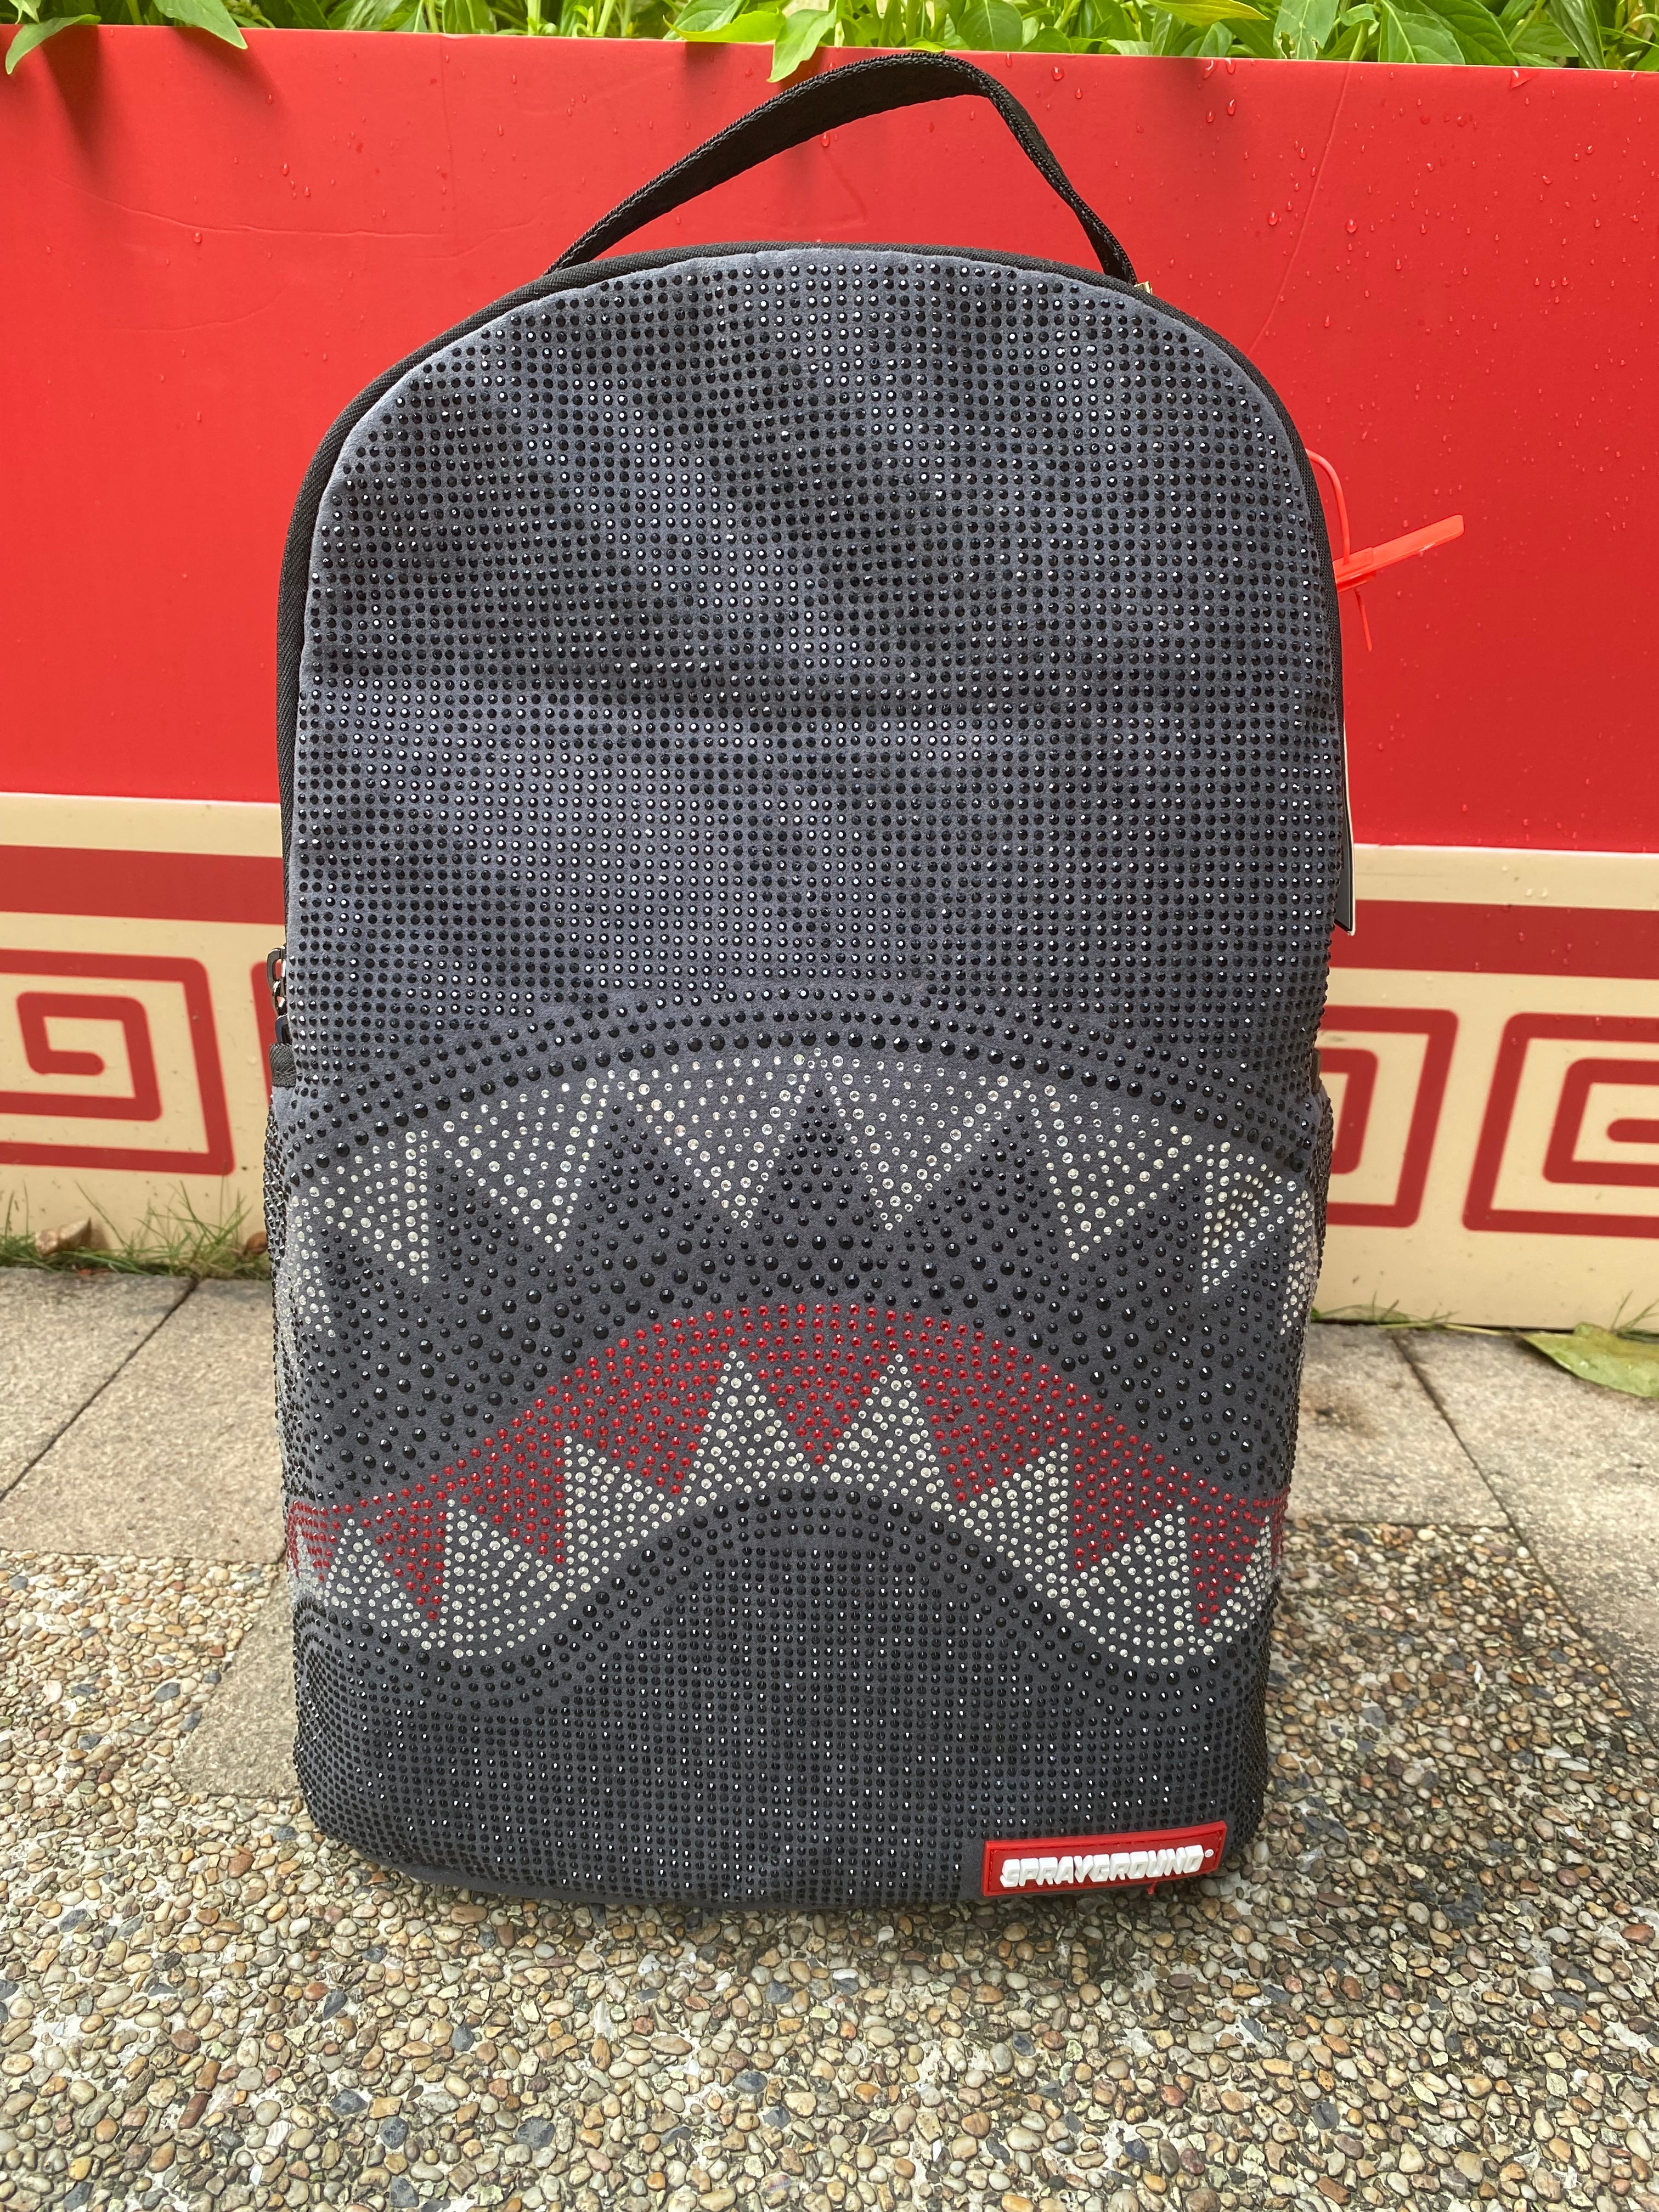 SPRAYGROUND Trinity Black Backpack (DLXV) Shark Mouth LIMITED EDITION